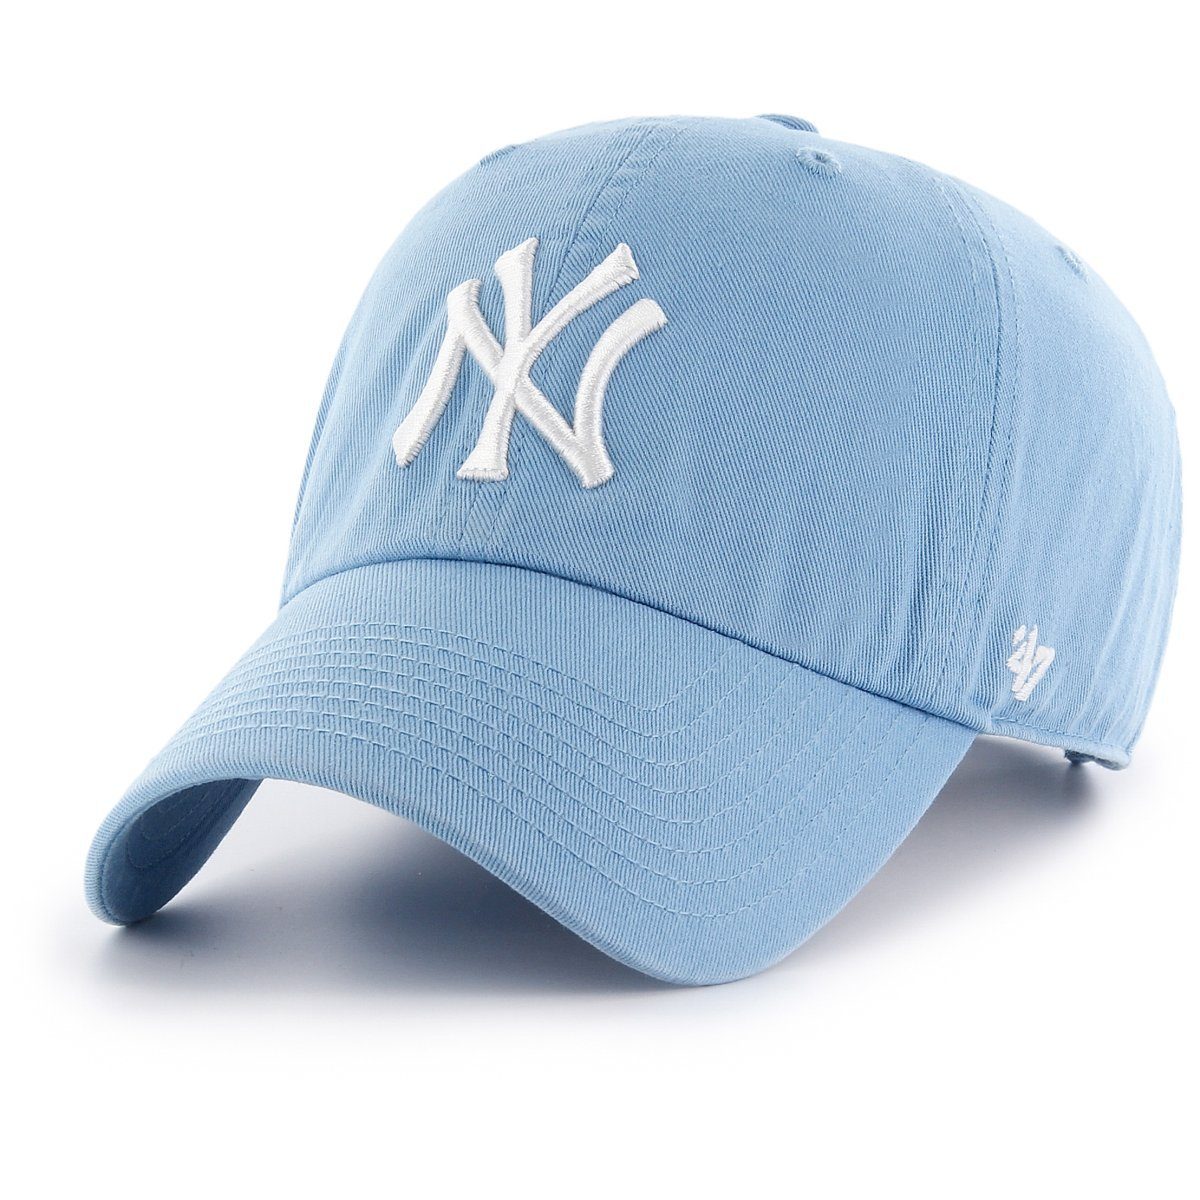 York Brand New columbia Yankees '47 UP Baseball CLEAN Cap